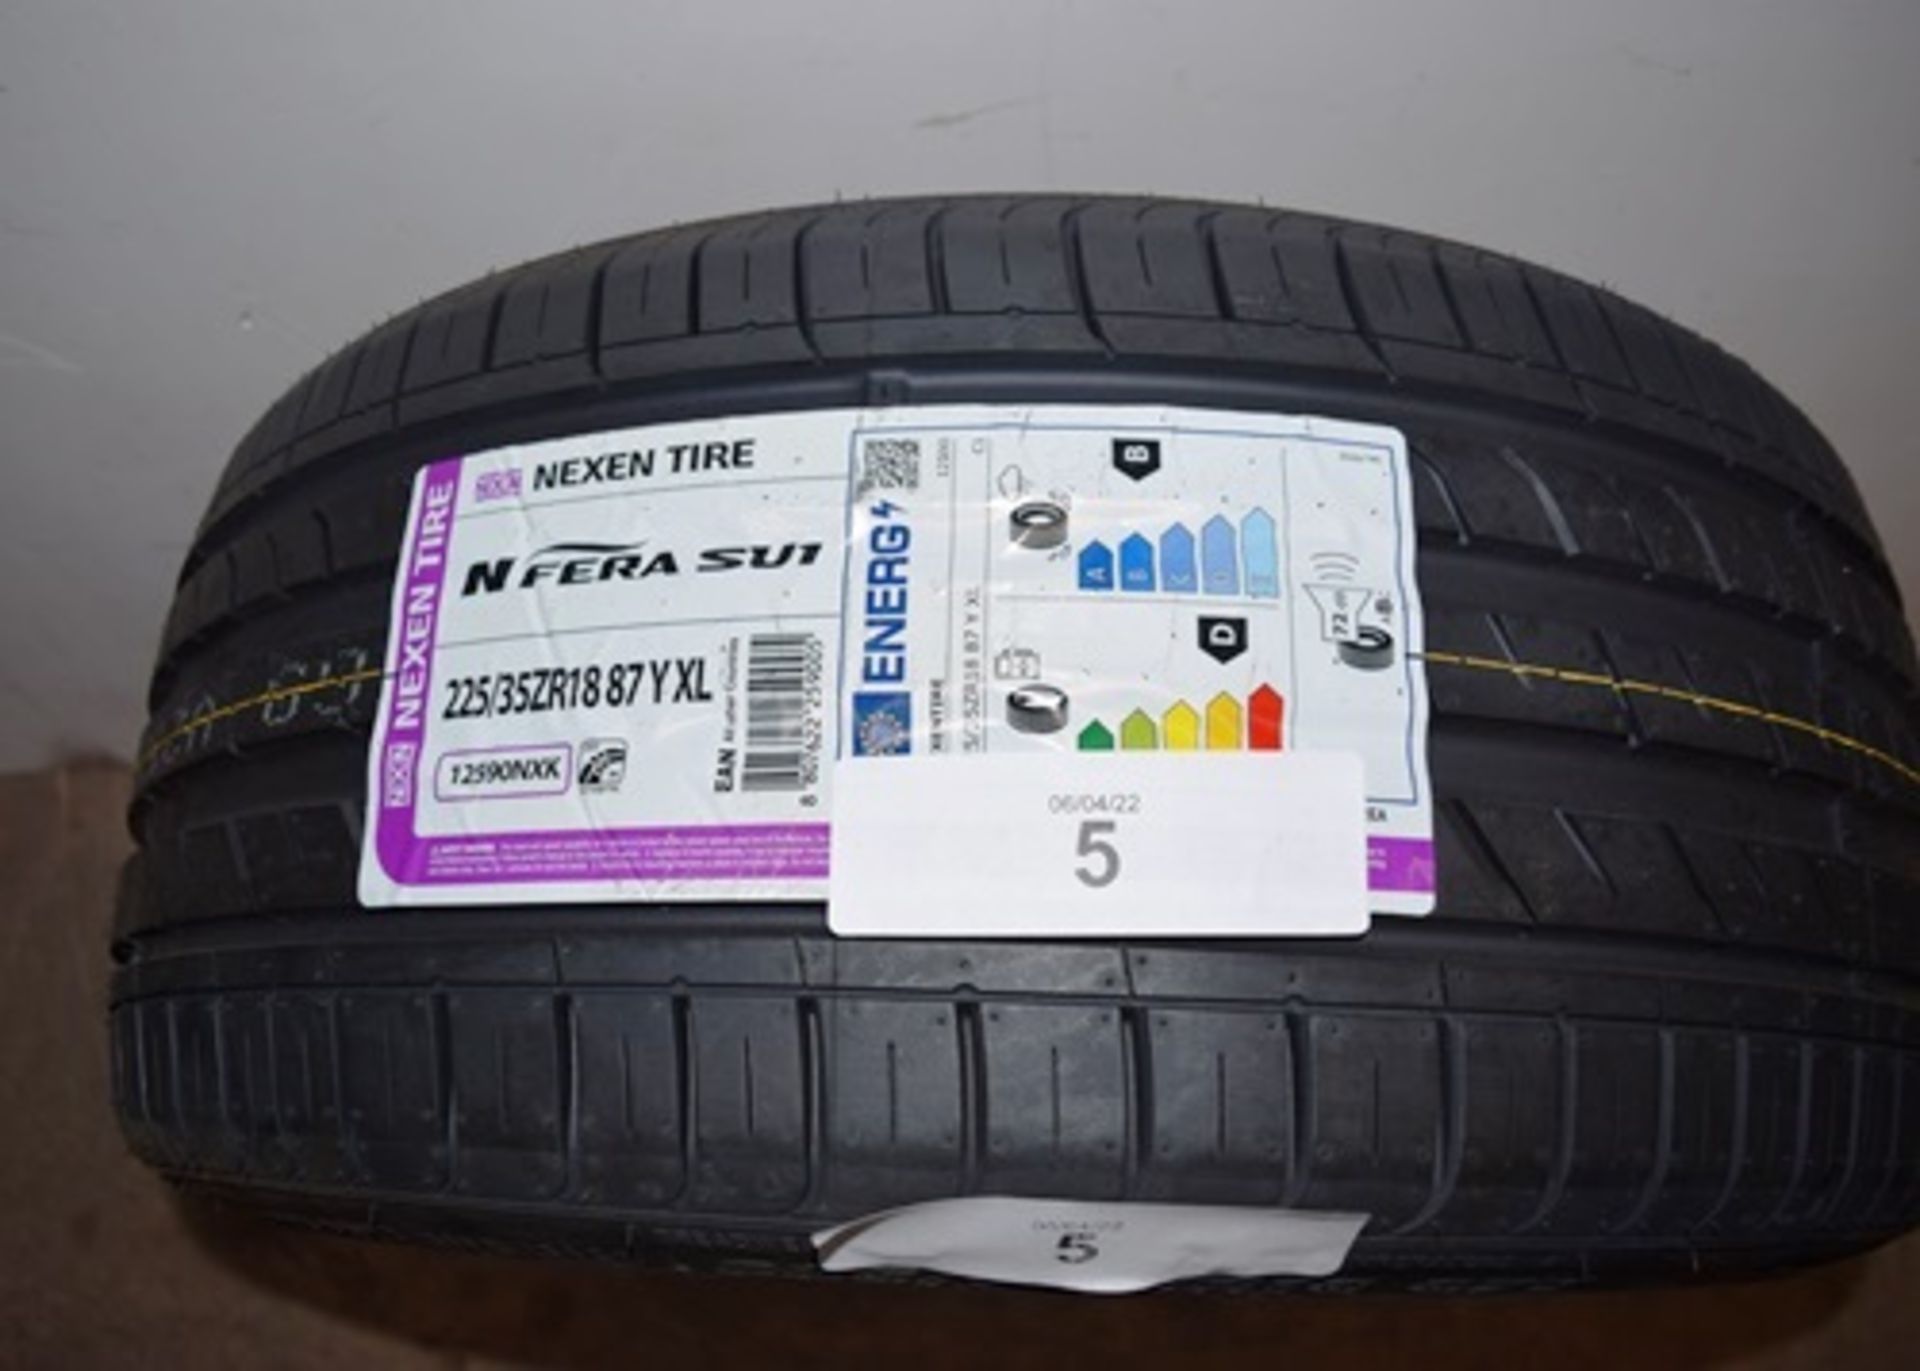 1 x Nexen N Fera SU1 tyre, size 225/35ZR18 87Y XL - New with label (GS1)